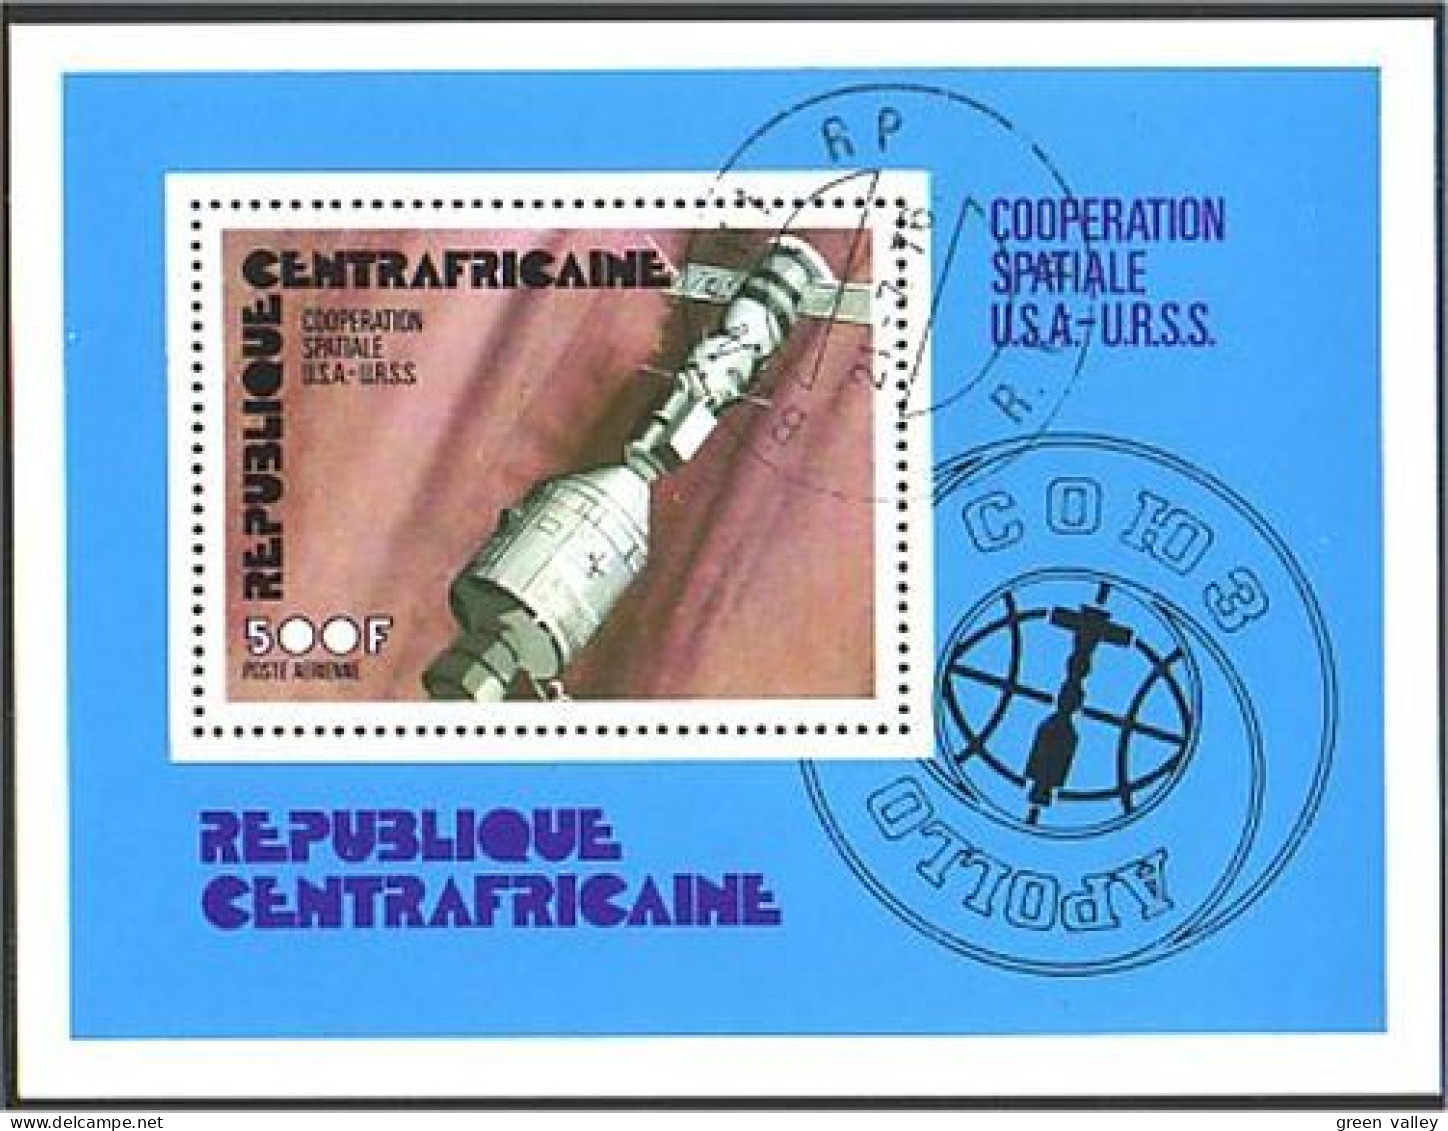 Centrafrique Cooperation Spatiale USA-URSS (A51-461) - Onafhankelijkheid USA